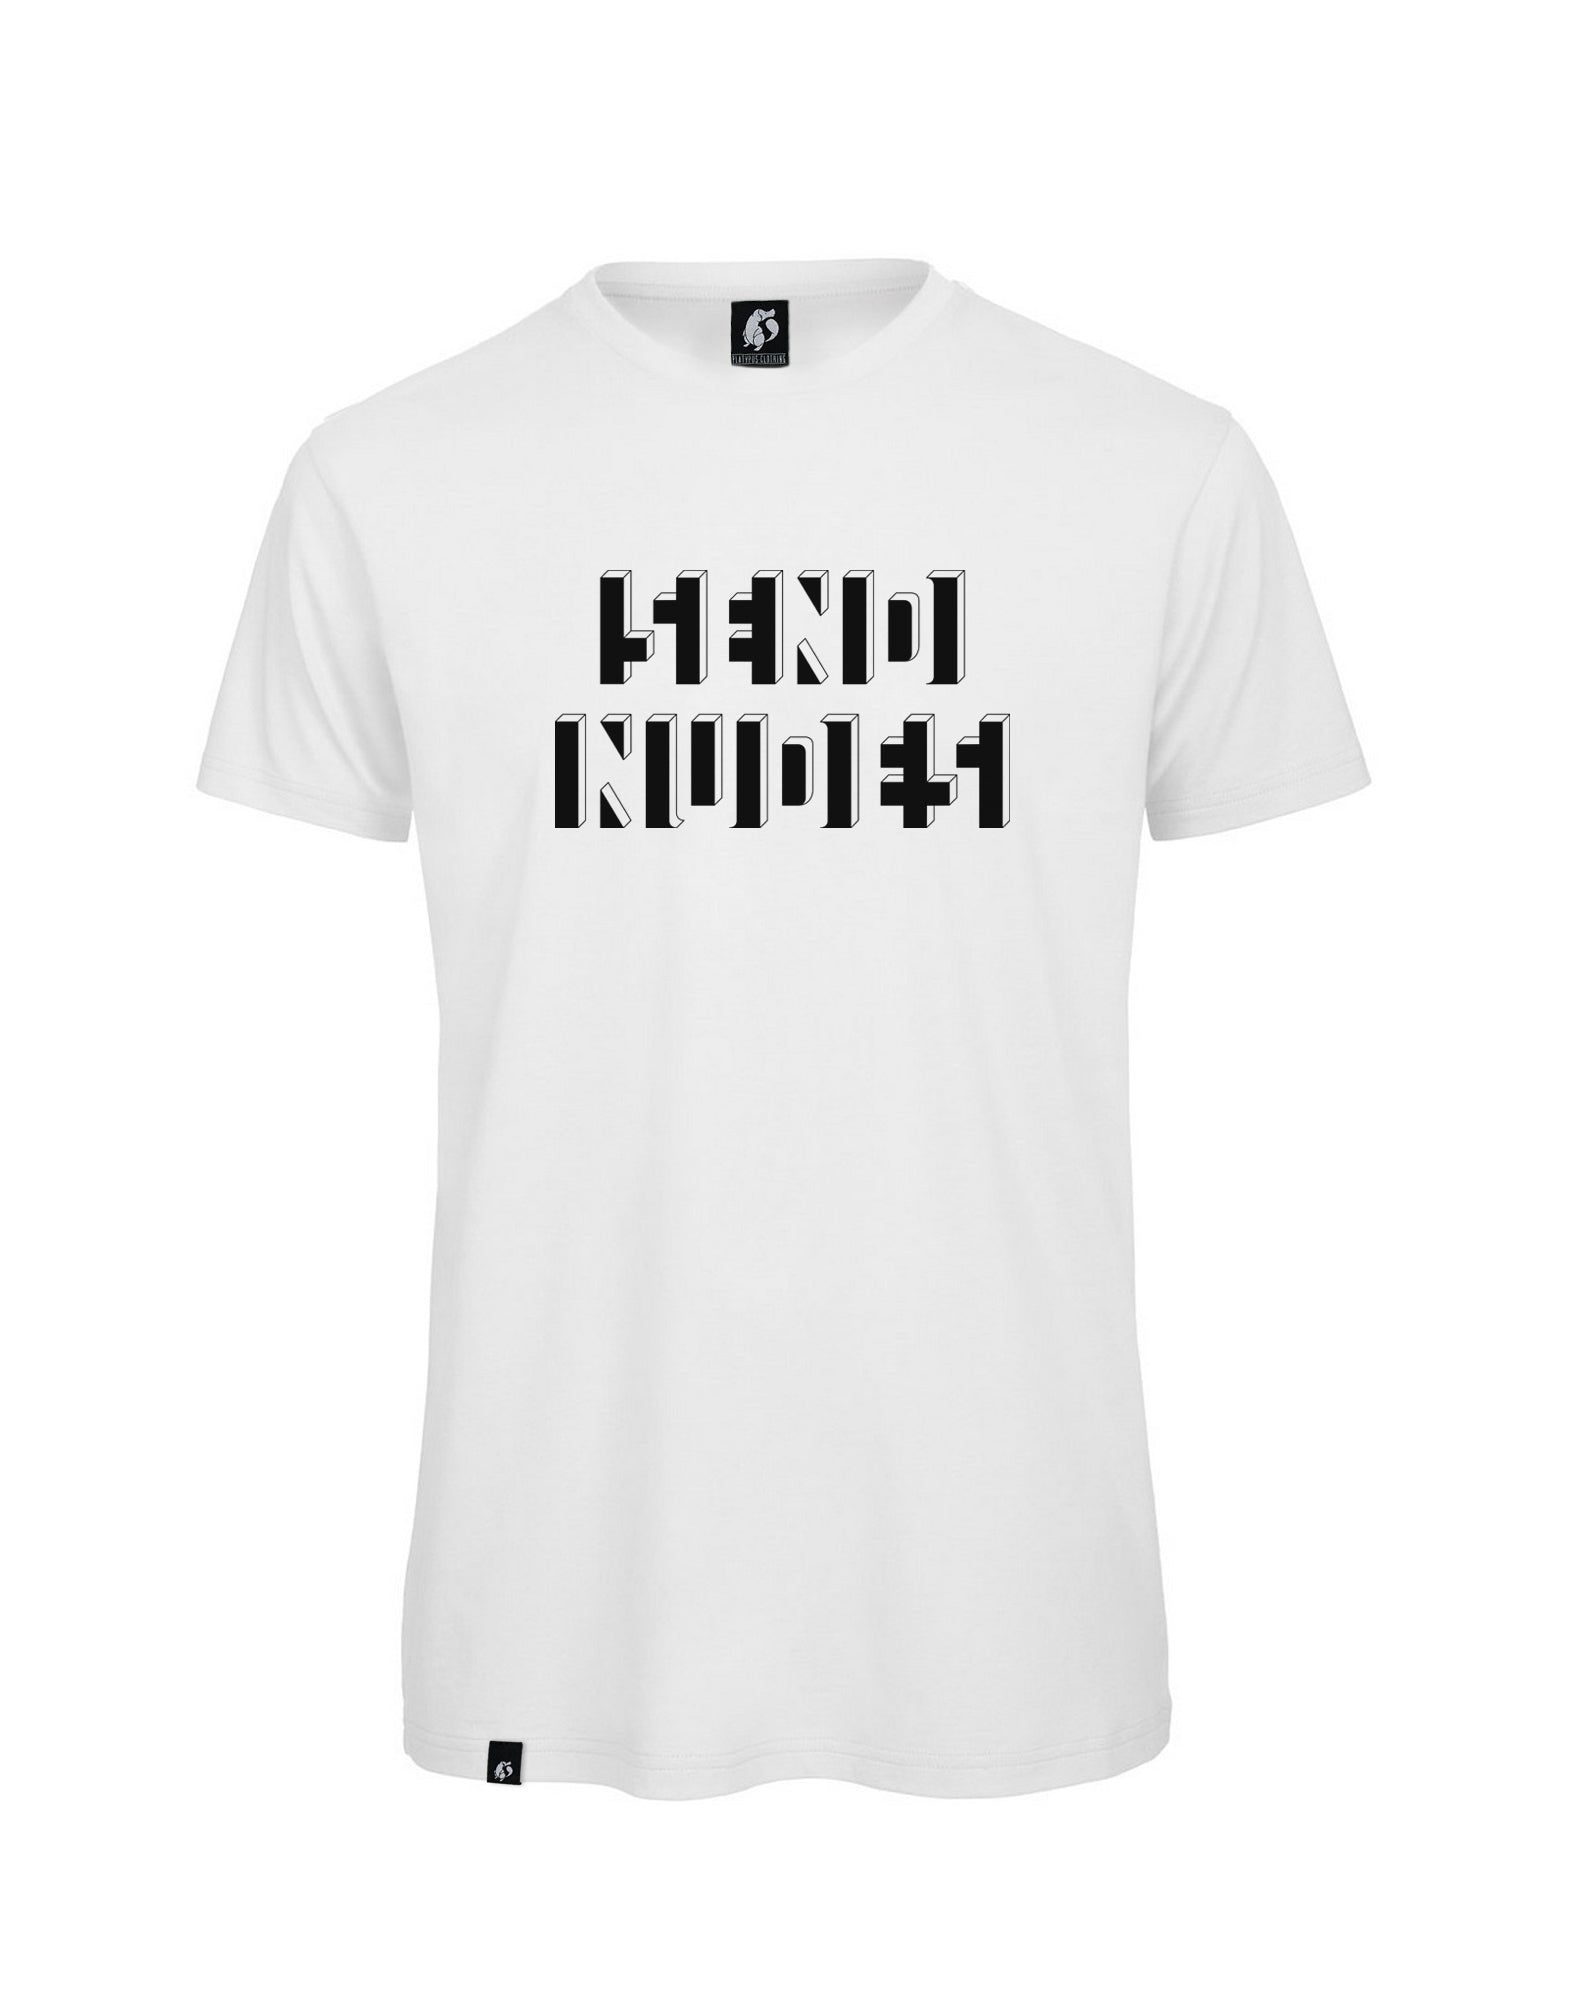 Send Nudes Optical Illusion White T-Shirt | Platypus UK Streetwear 